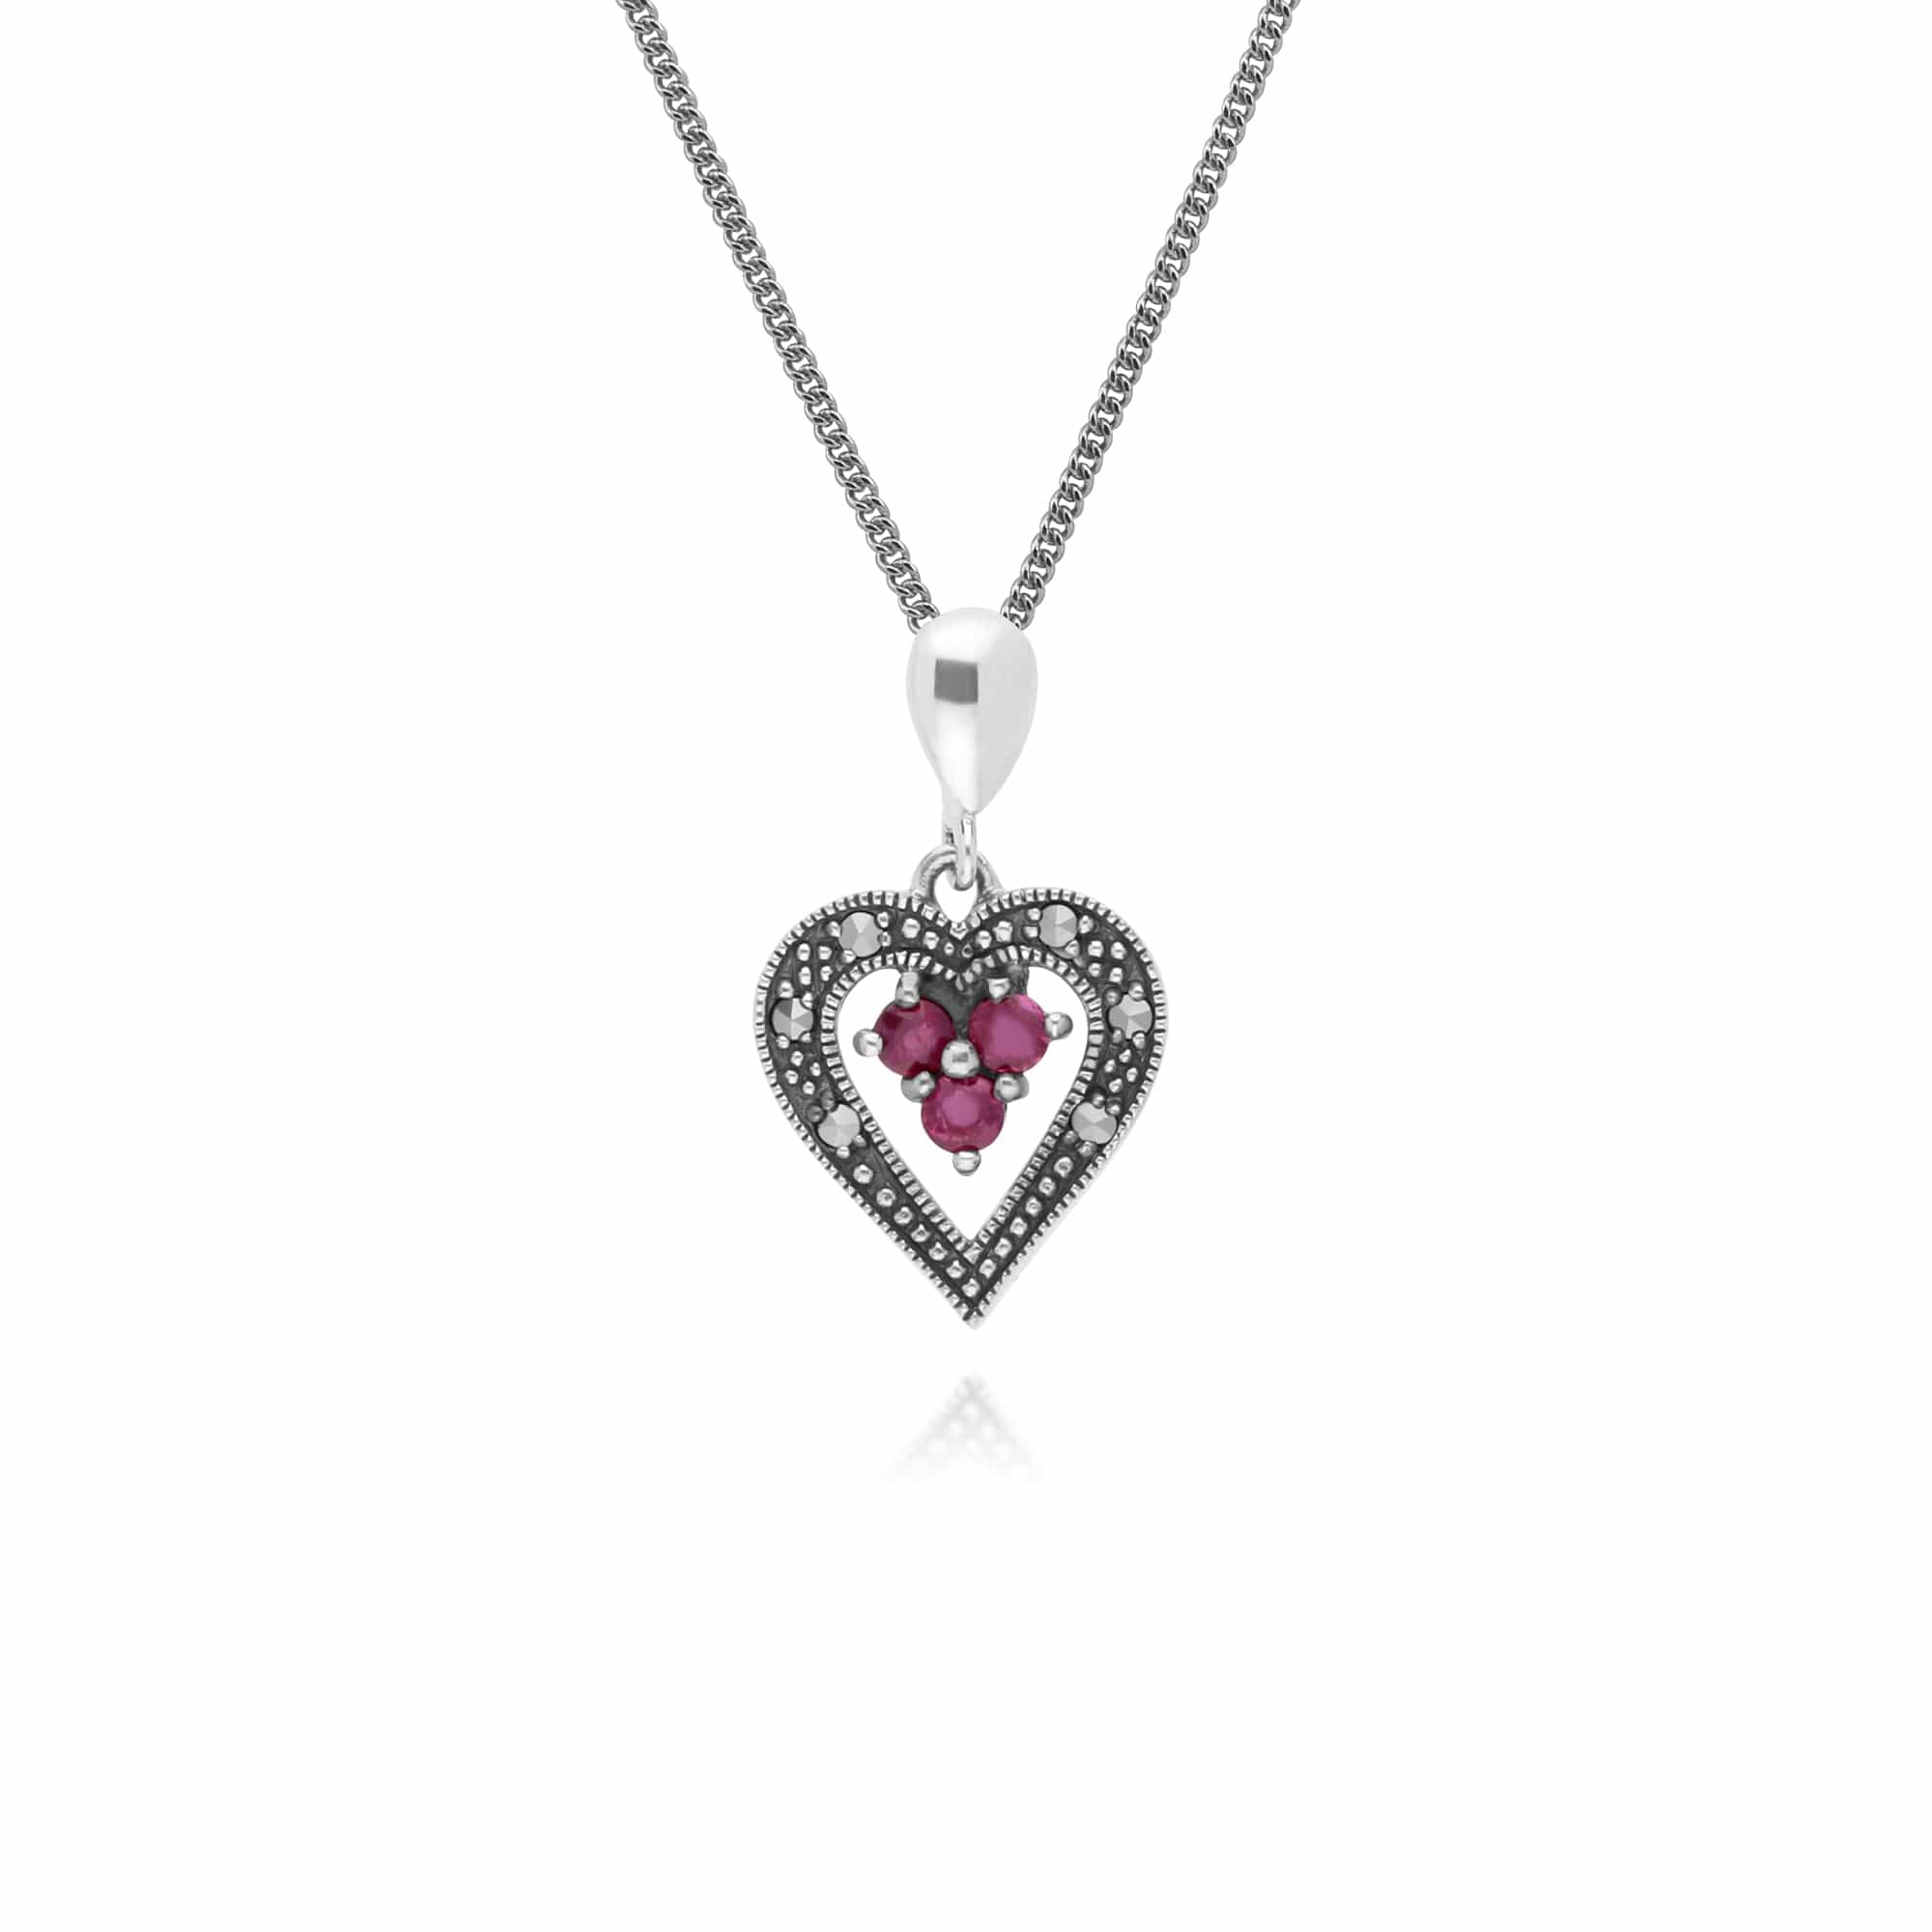 214E616102925-214N481204925 Art Nouveau Style Style Round Ruby & Marcasite Heart Earrings & Pendant Set in 925 Sterling Silver 3